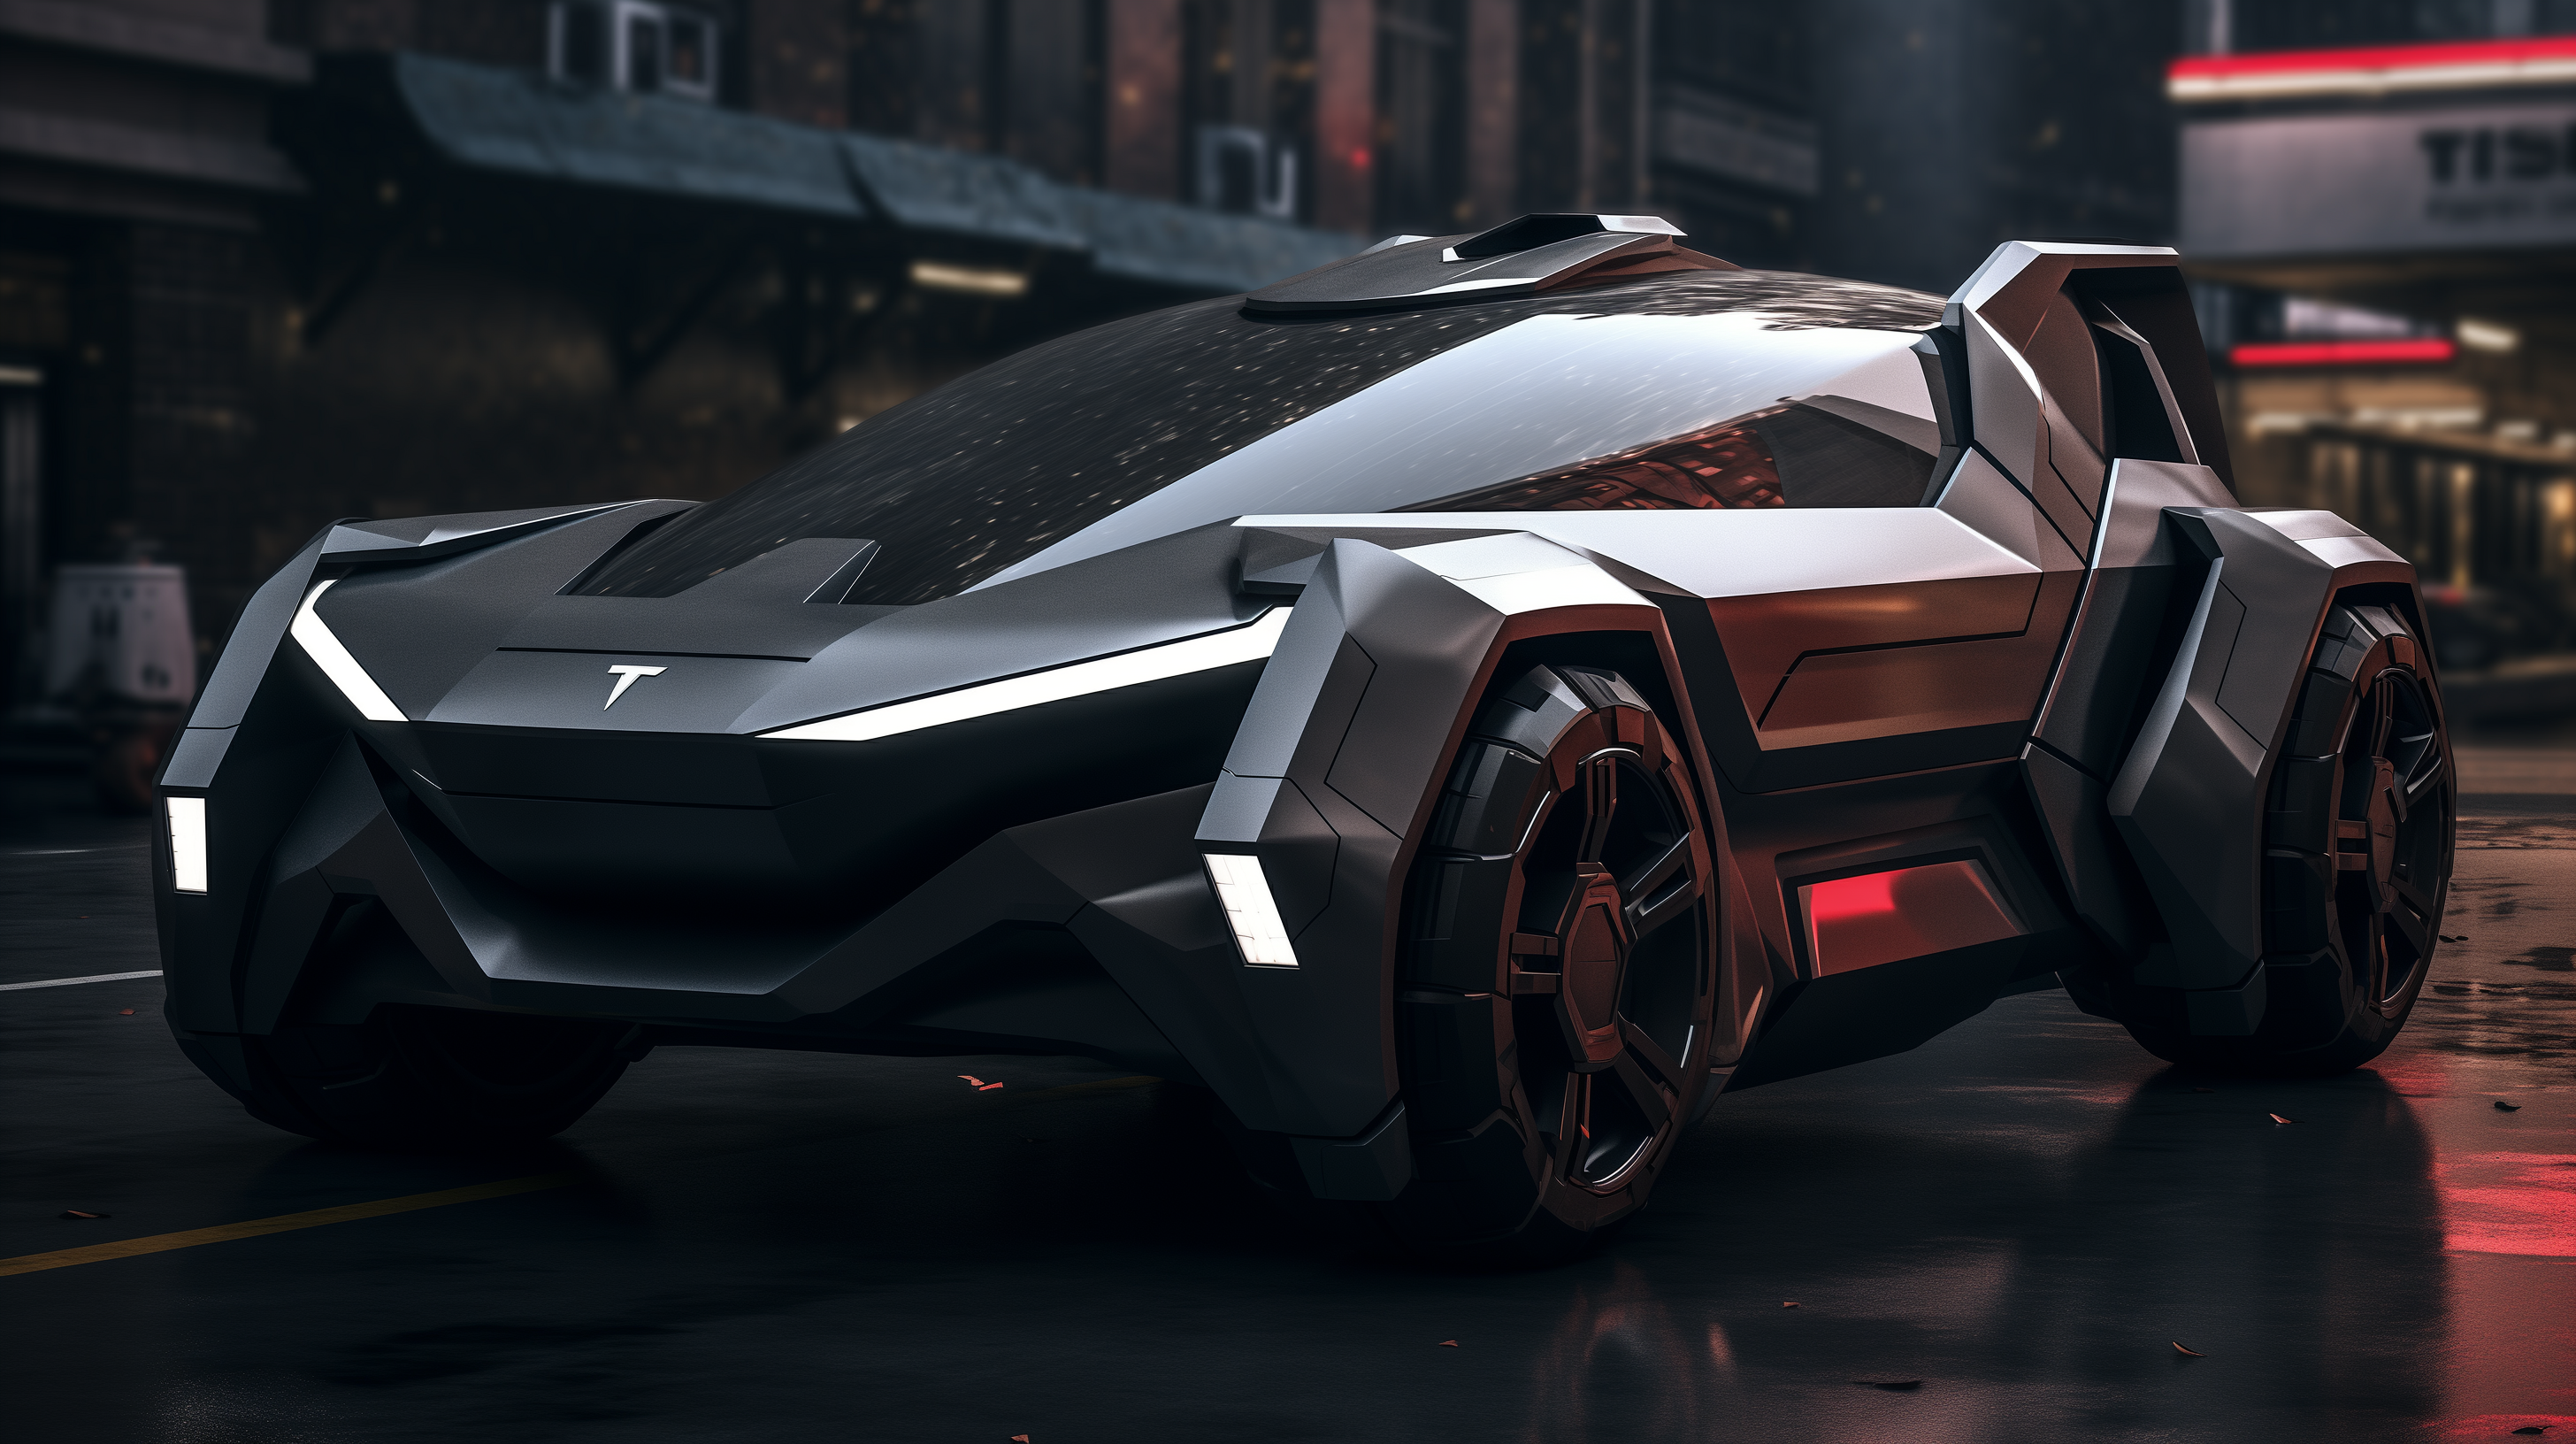 Futuristic Tesla vehicle concept HD wallpaper for desktop background, showcasing a sleek design with a dark, urban setting.